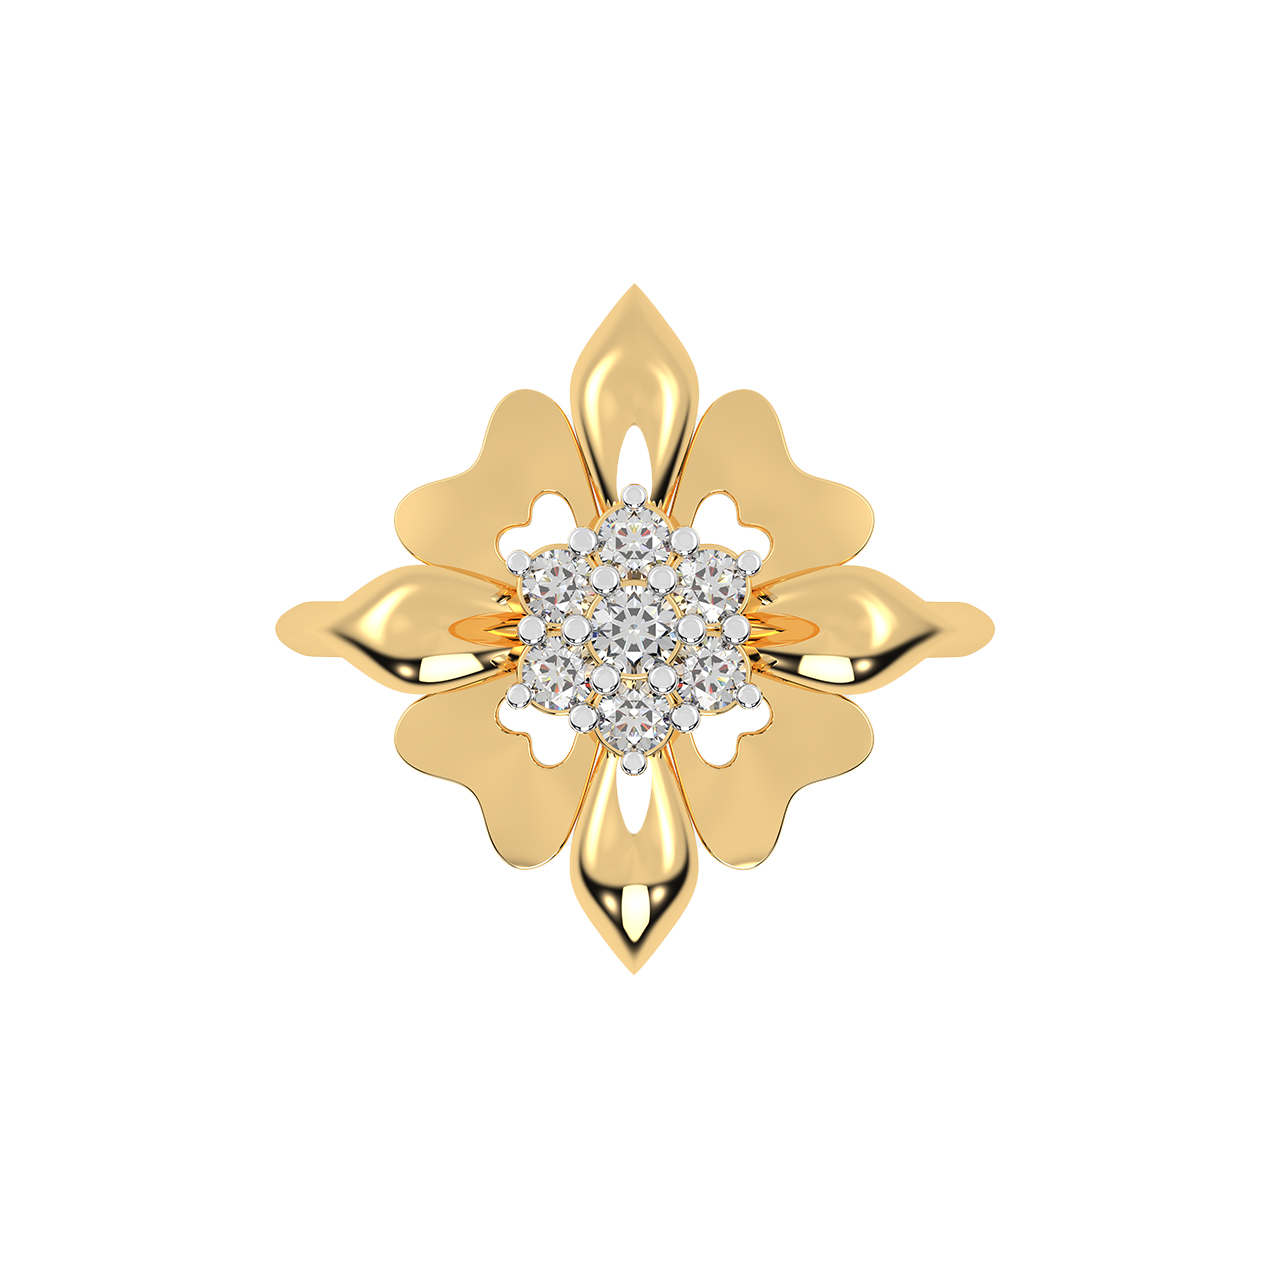 Four Petal Design Diamond Ring